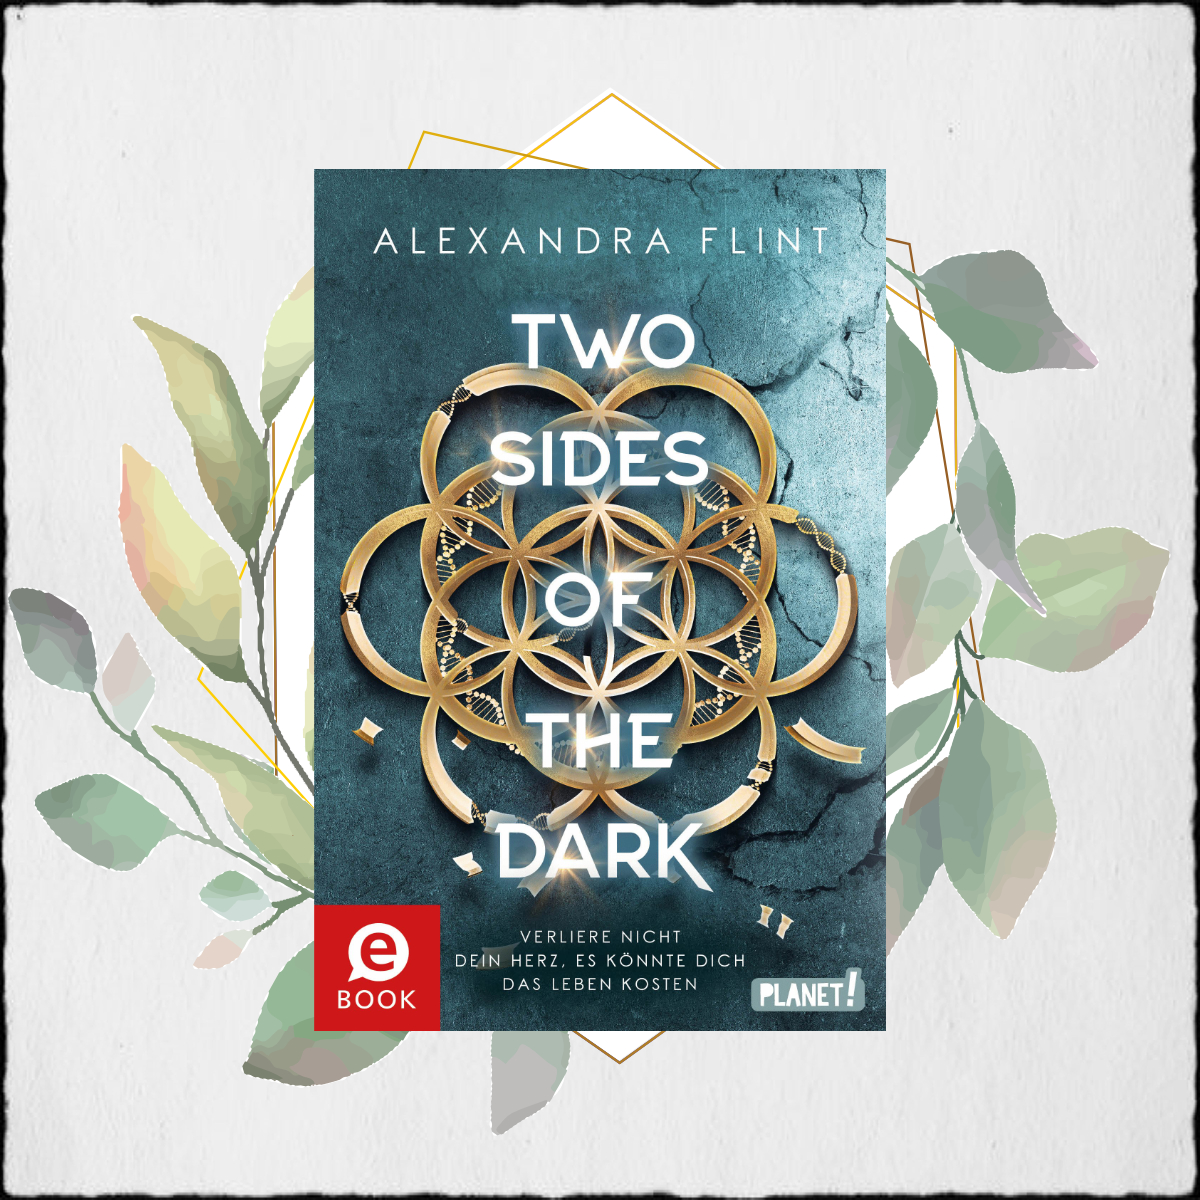 Alexandra Flint "Two Sides of The Dark – Emerdale 1" ©2022 Planet!